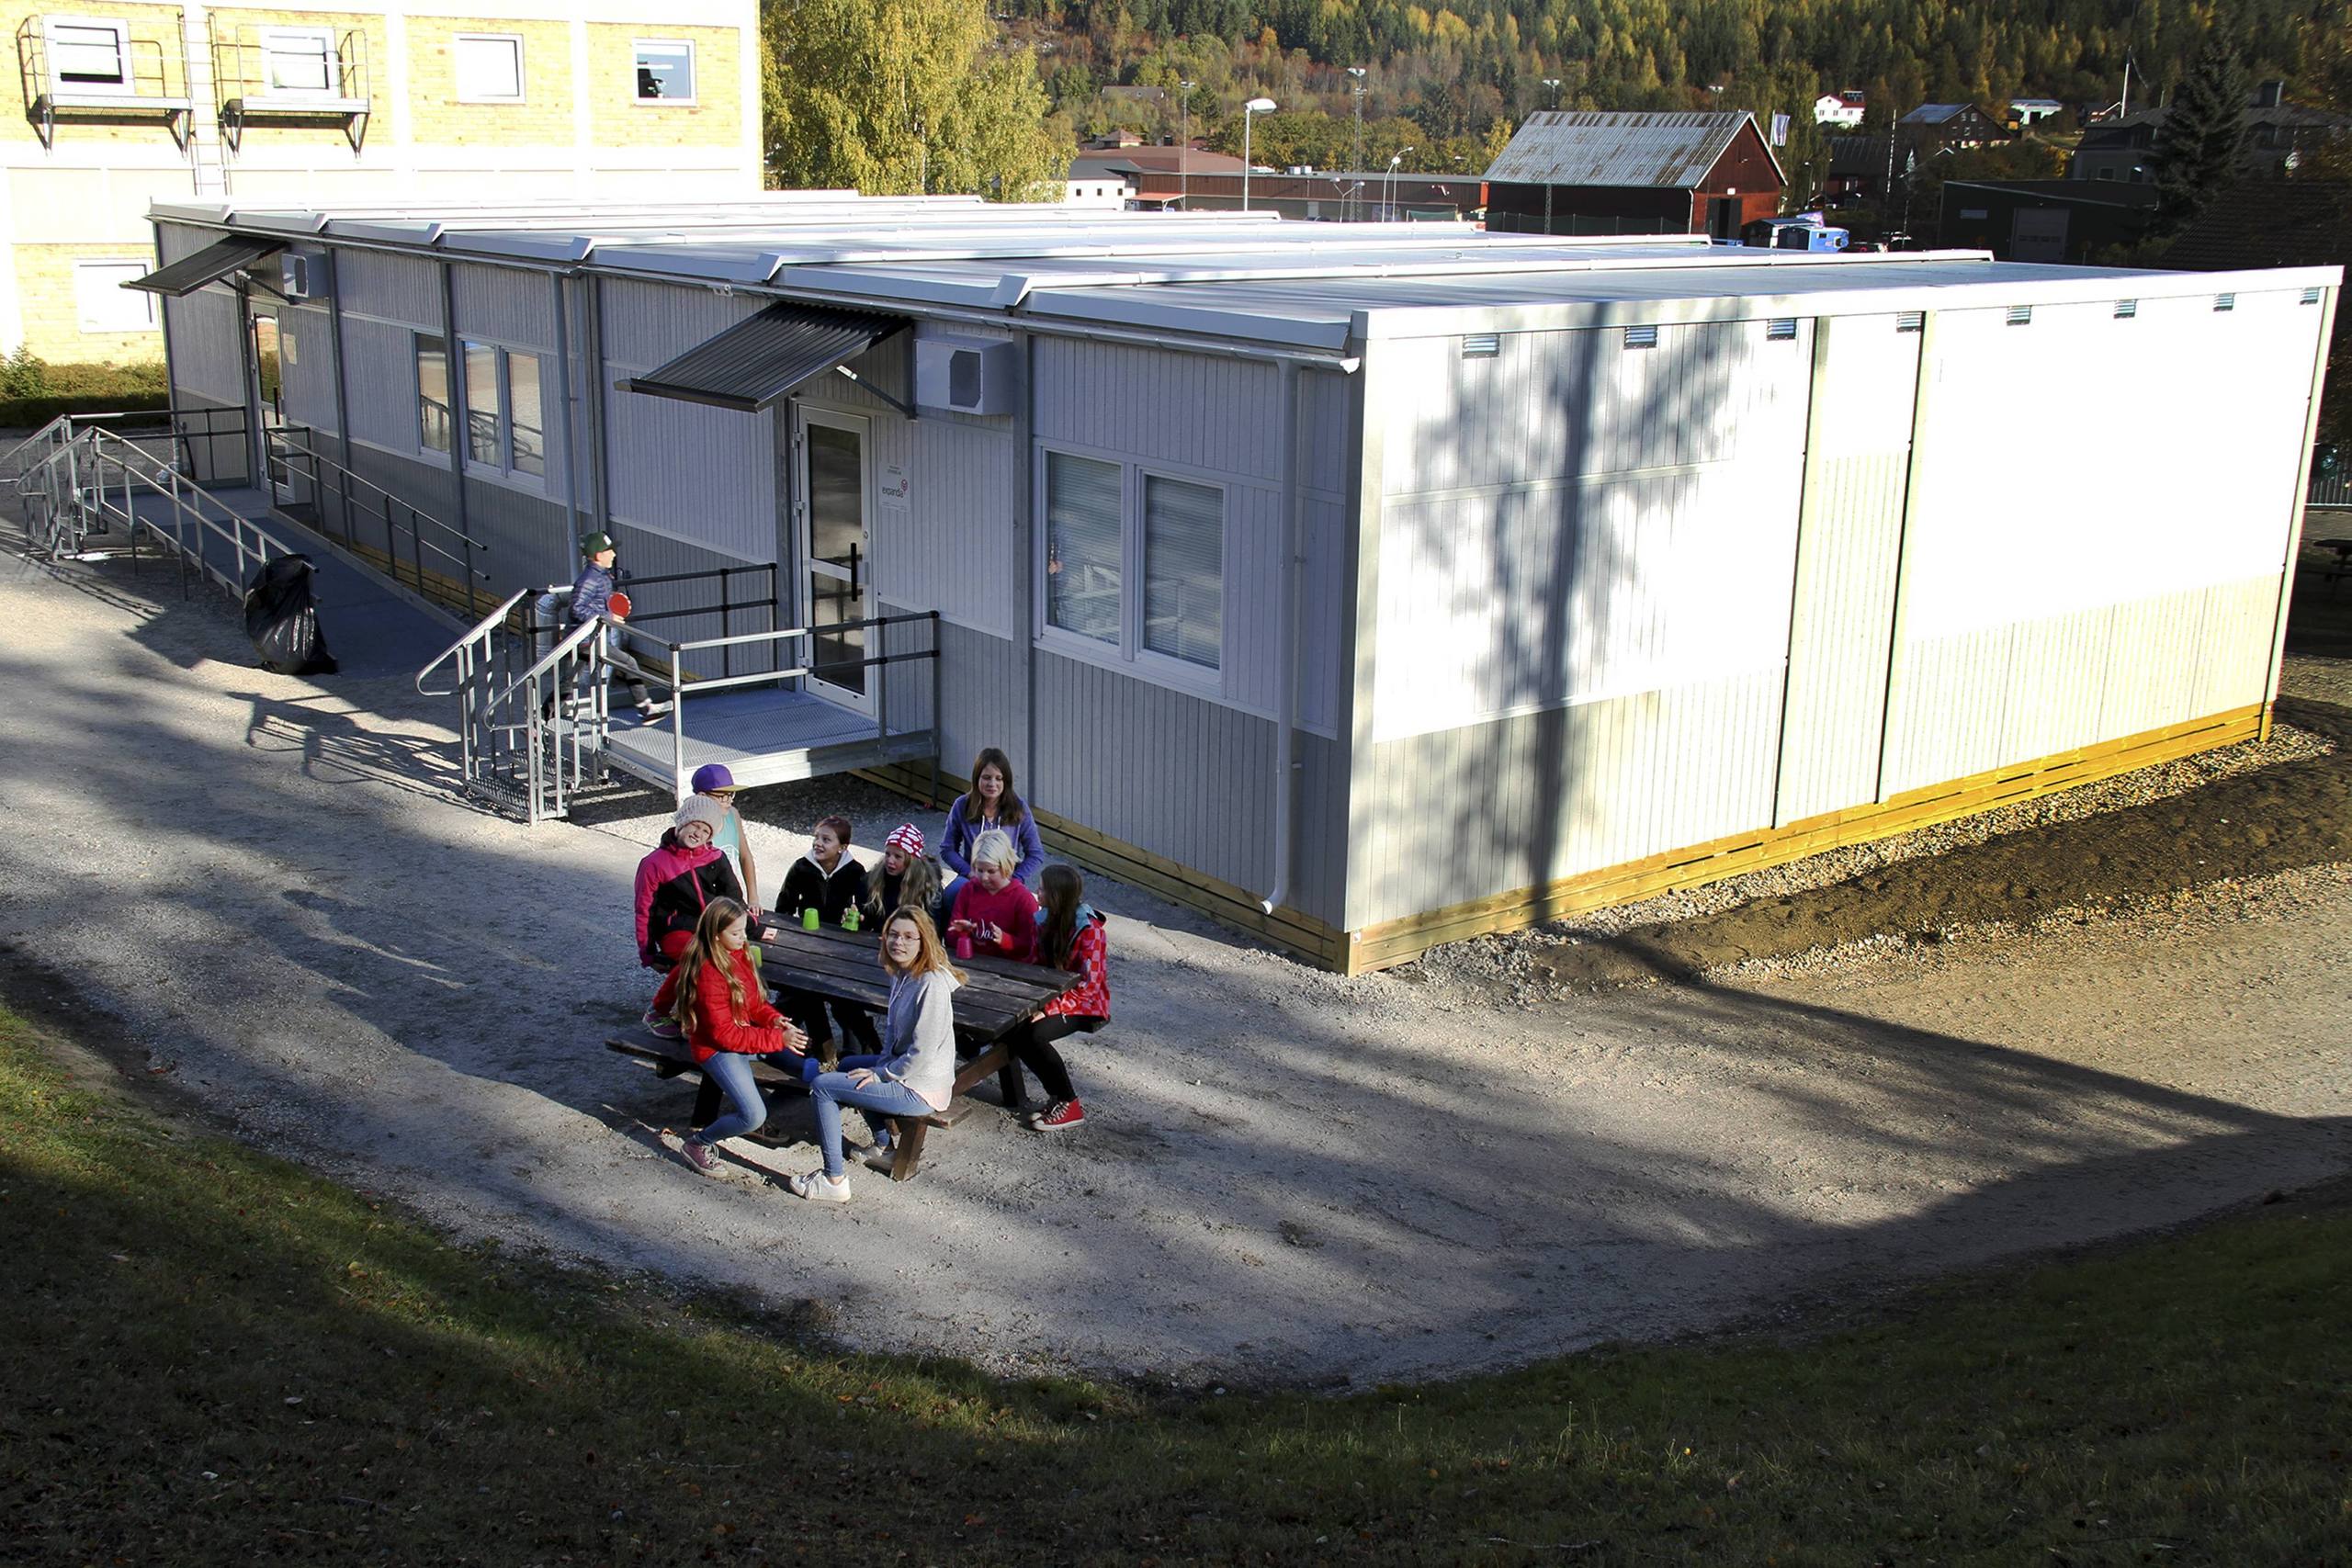 Bergsjö skola  Nordanstigs kommun